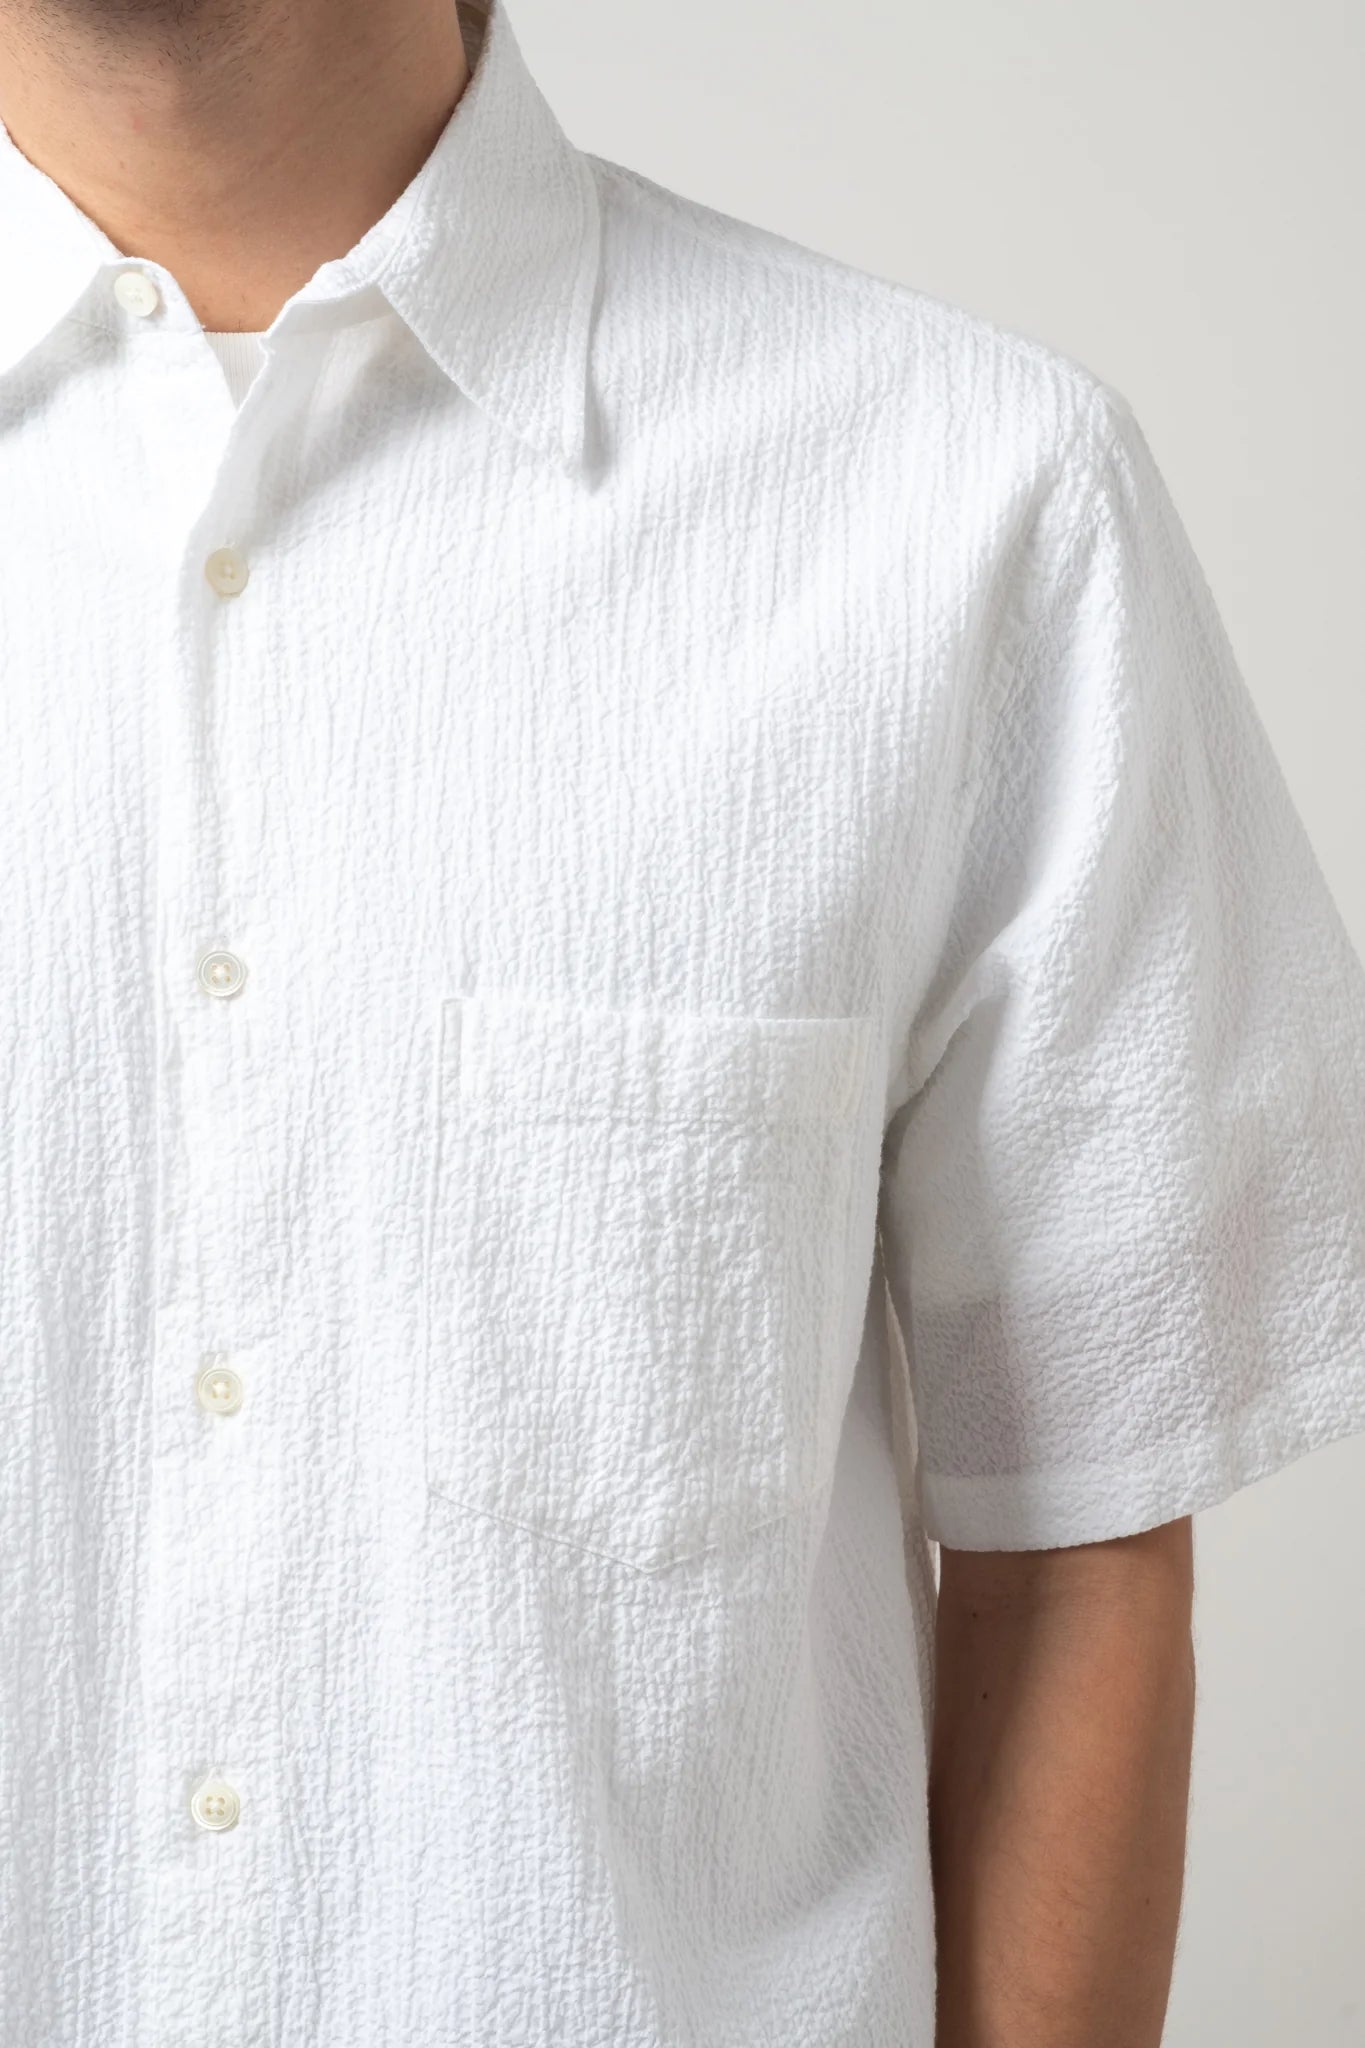 C.O.F. Studio Standard Short Sleeve Seersucker Shirt in white